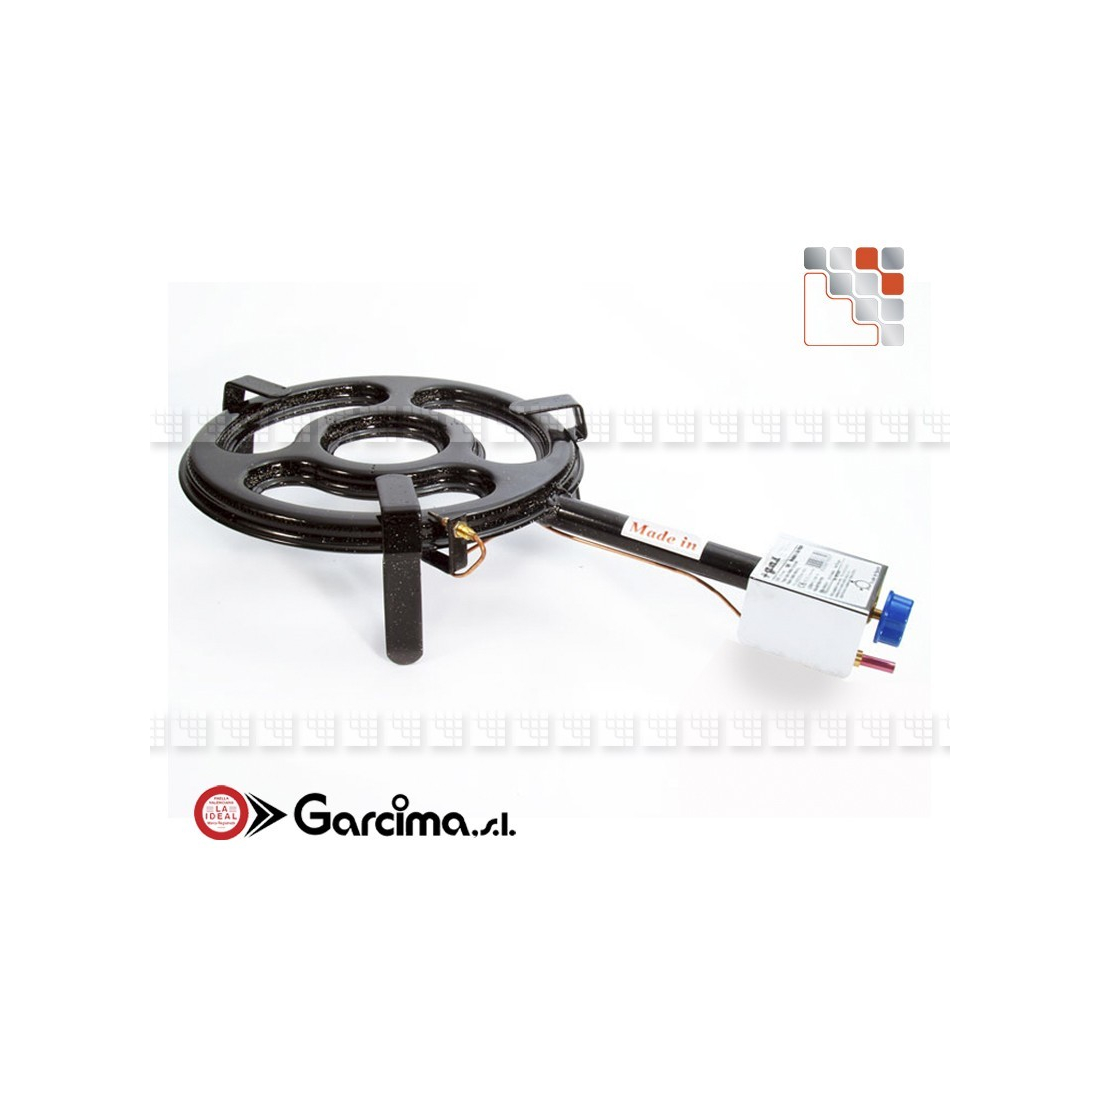 Garcima L20 Pro CTE Paella Burner G05-76320 GARCIMA® LaIdeal Garcima Paella Gas Burners